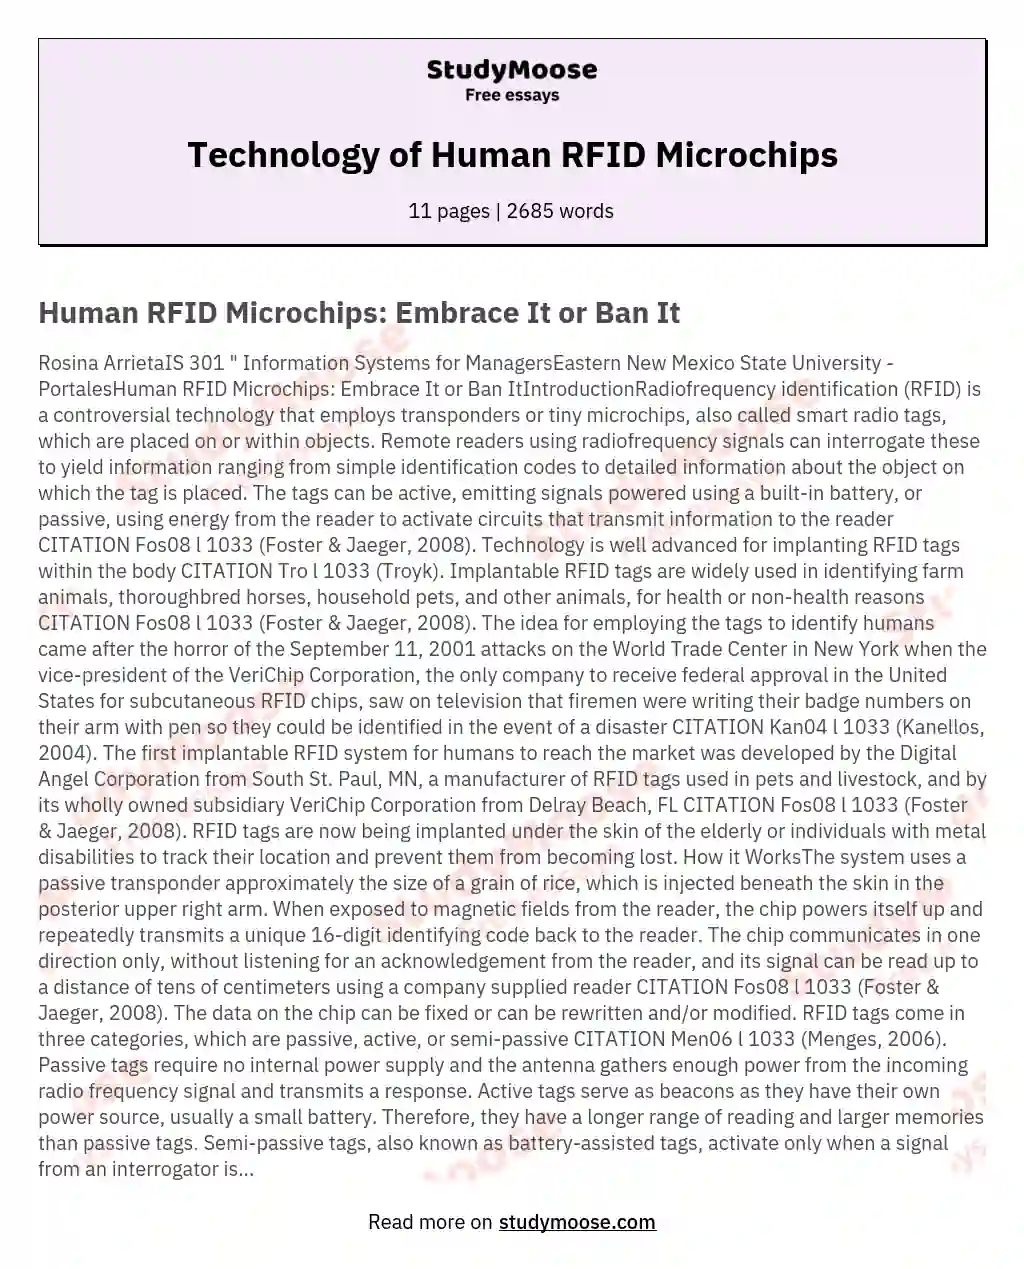 Technology of Human RFID Microchips essay